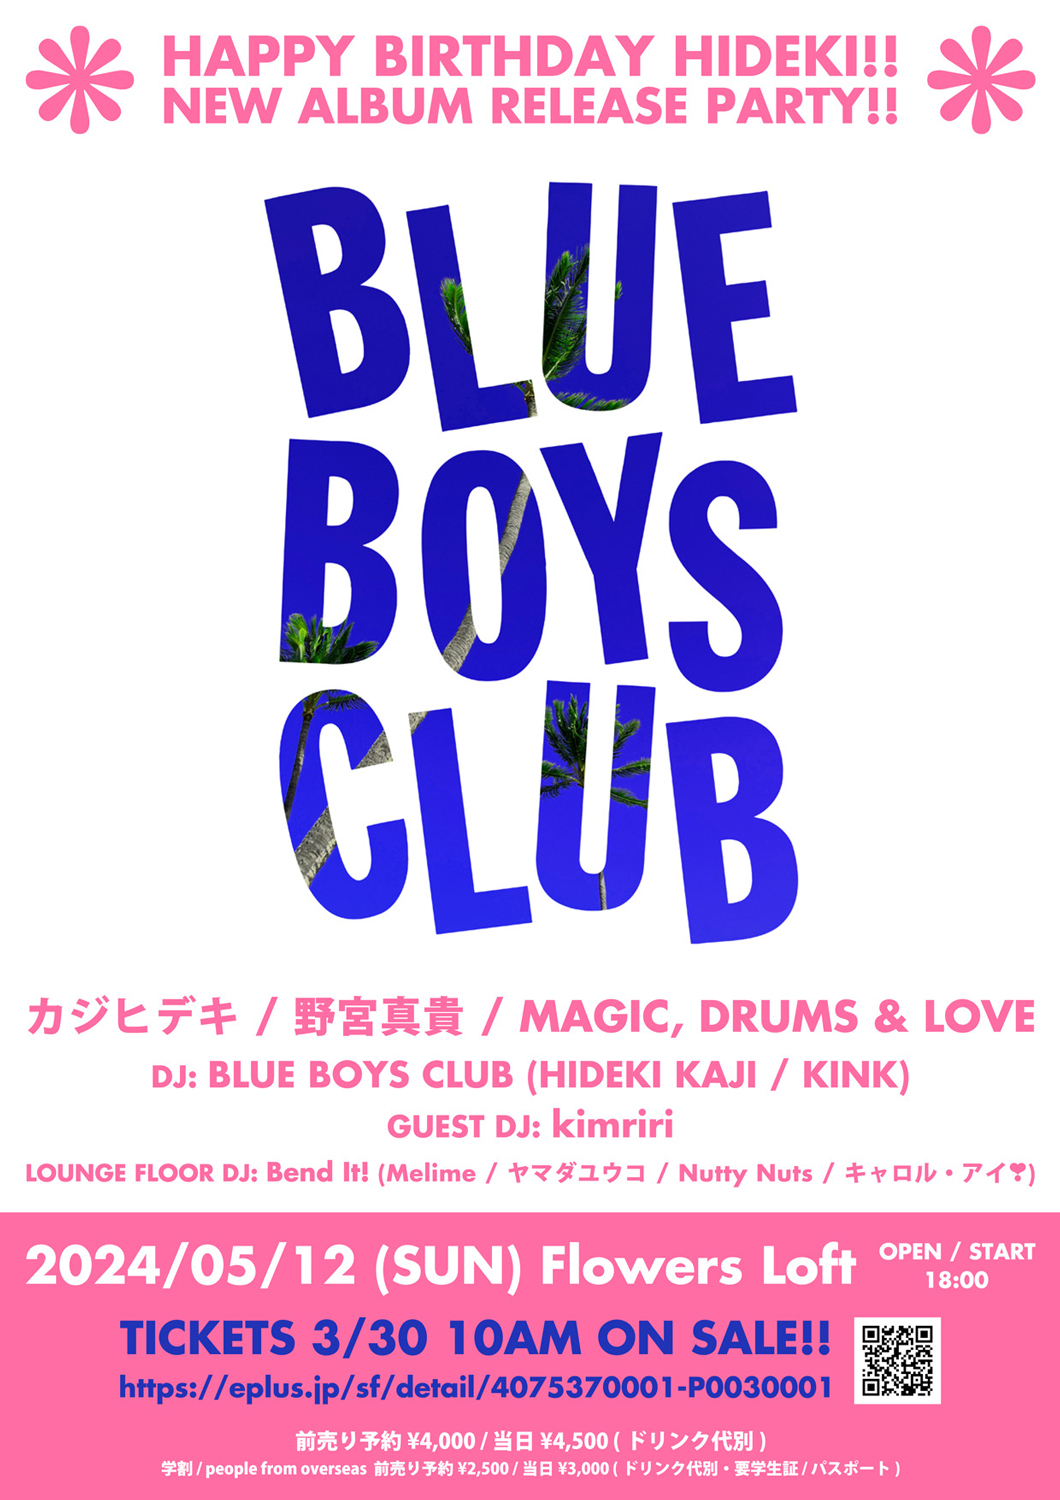 「BLUE BOYS CLUB -HIDEKI HAPPY BIRTHDAY & NEW ALBUM  RELEASE SPECIAL!!-」